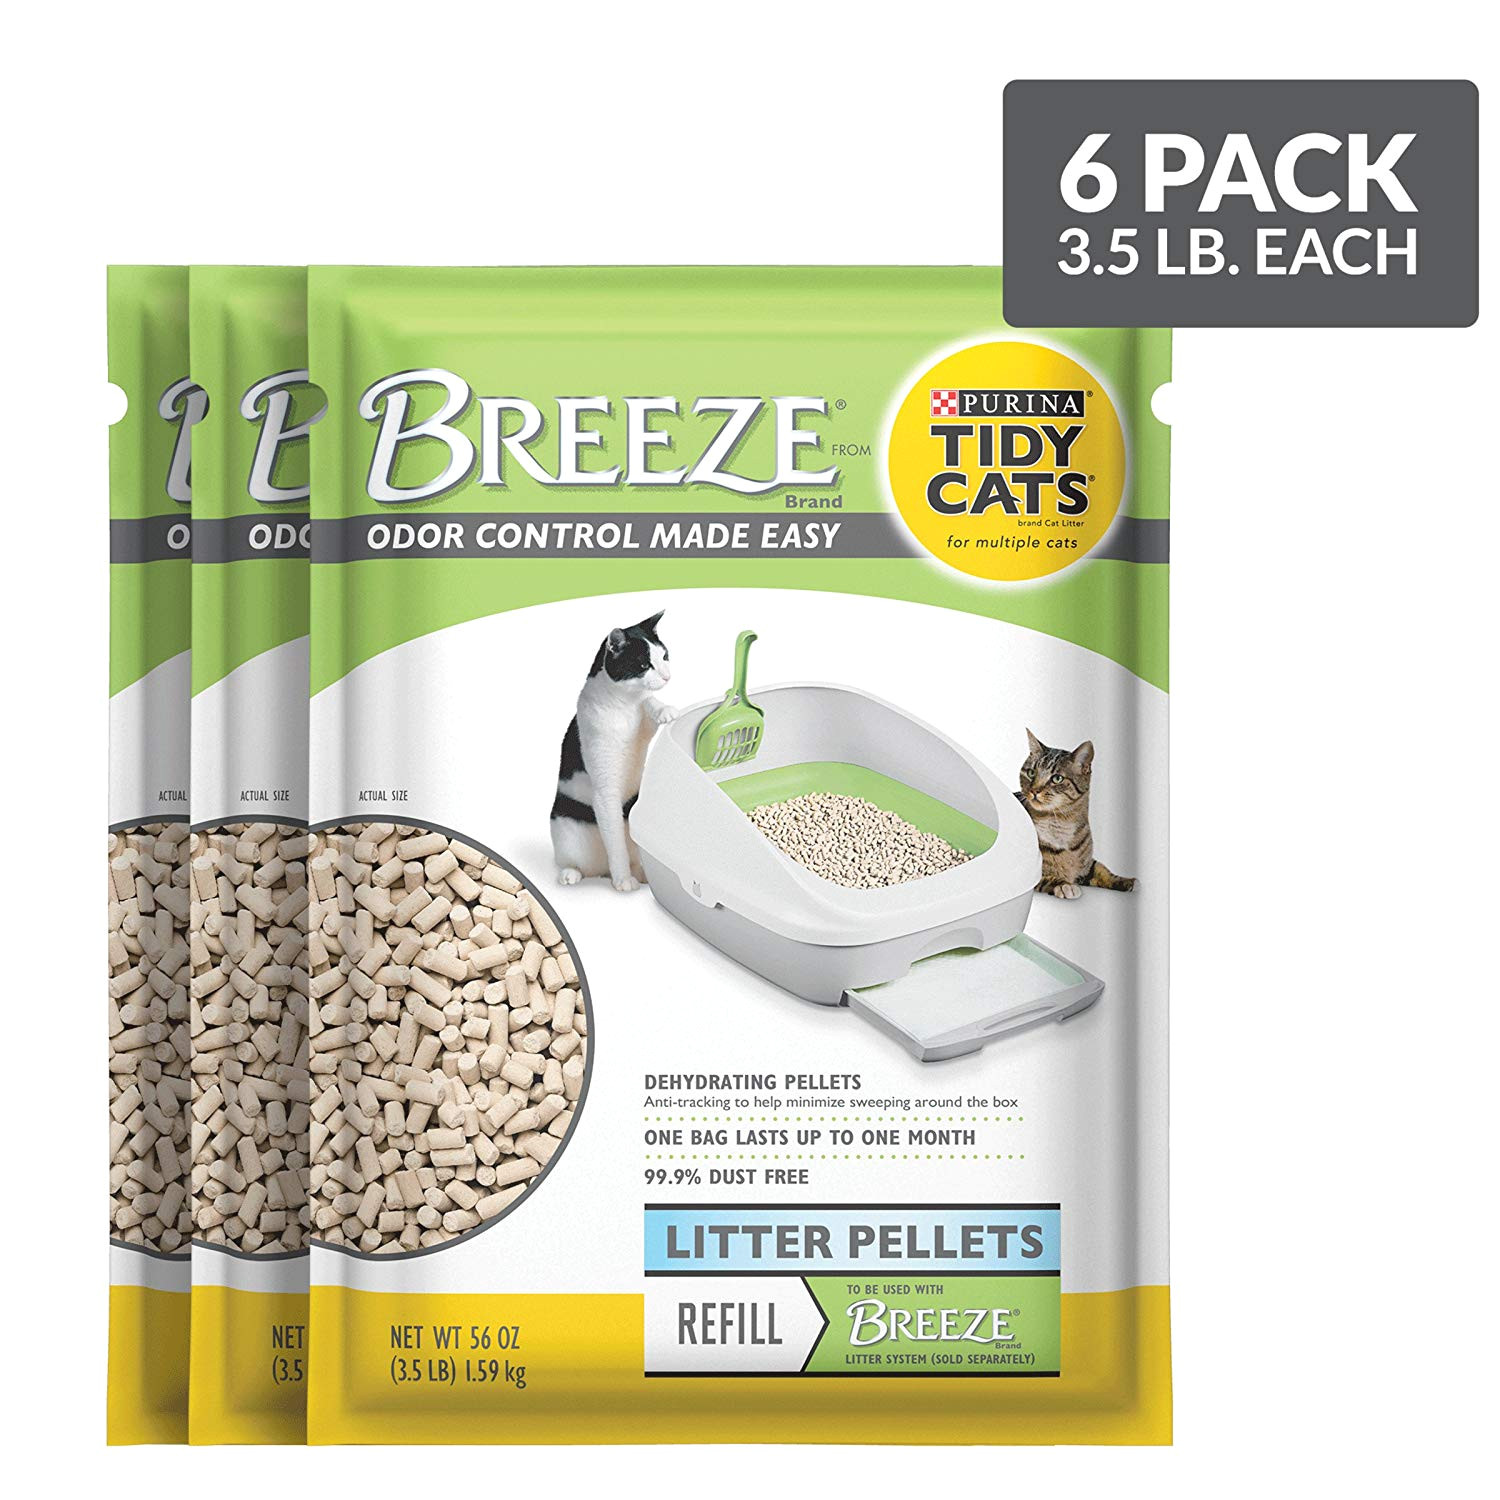 The Breeze Litter Box Reviews Amazon Com Purina Tidy Cats Breeze